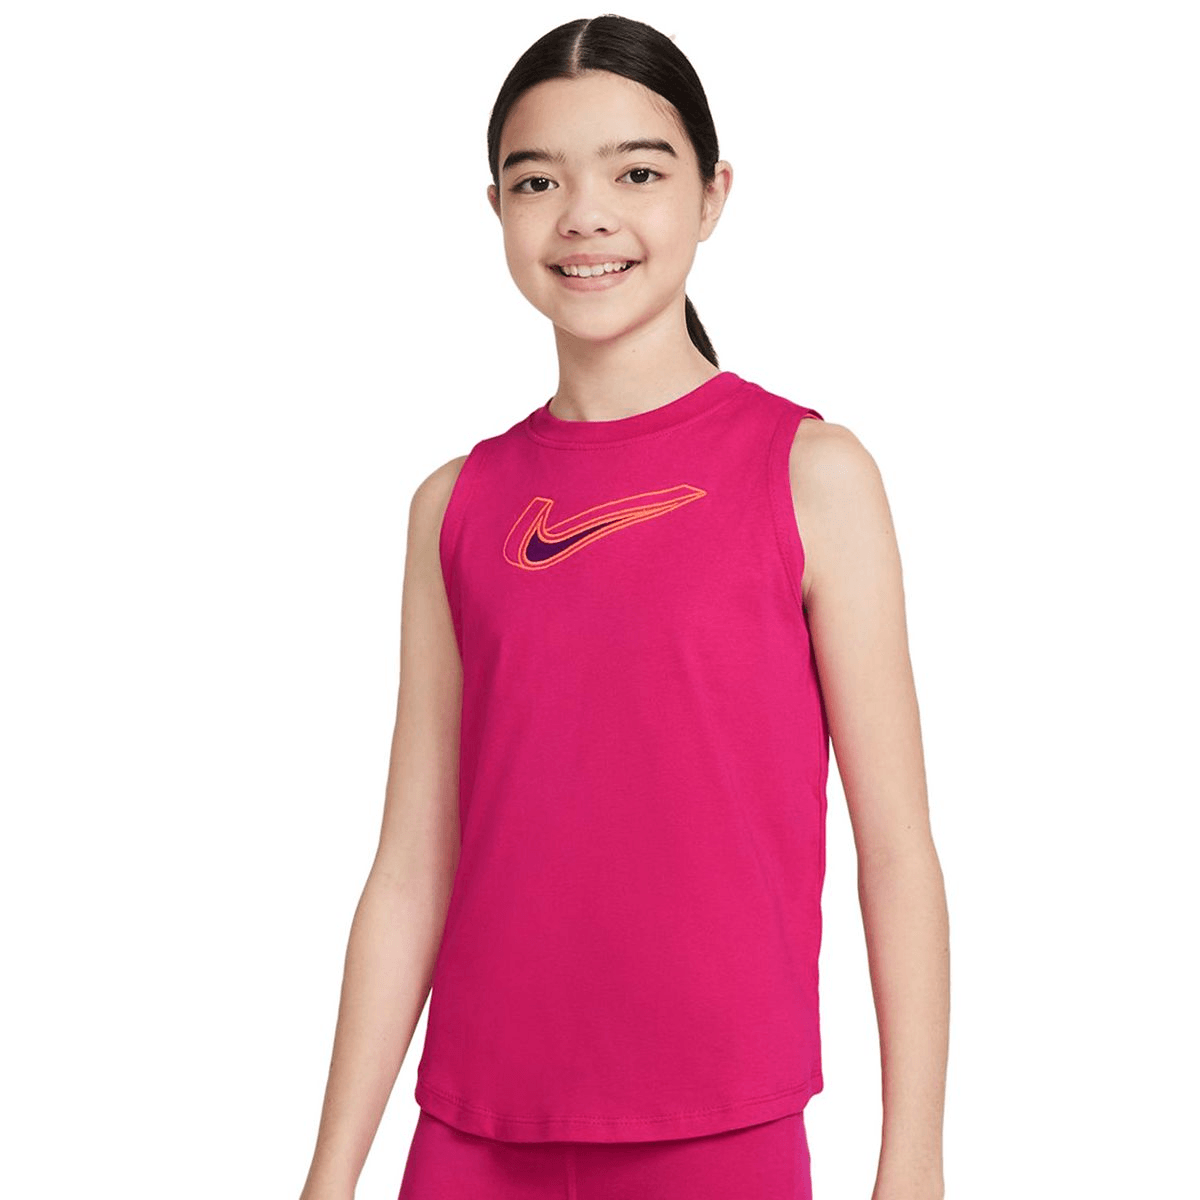 Nike Laser Letters Tank Top - Girls' - Als.com